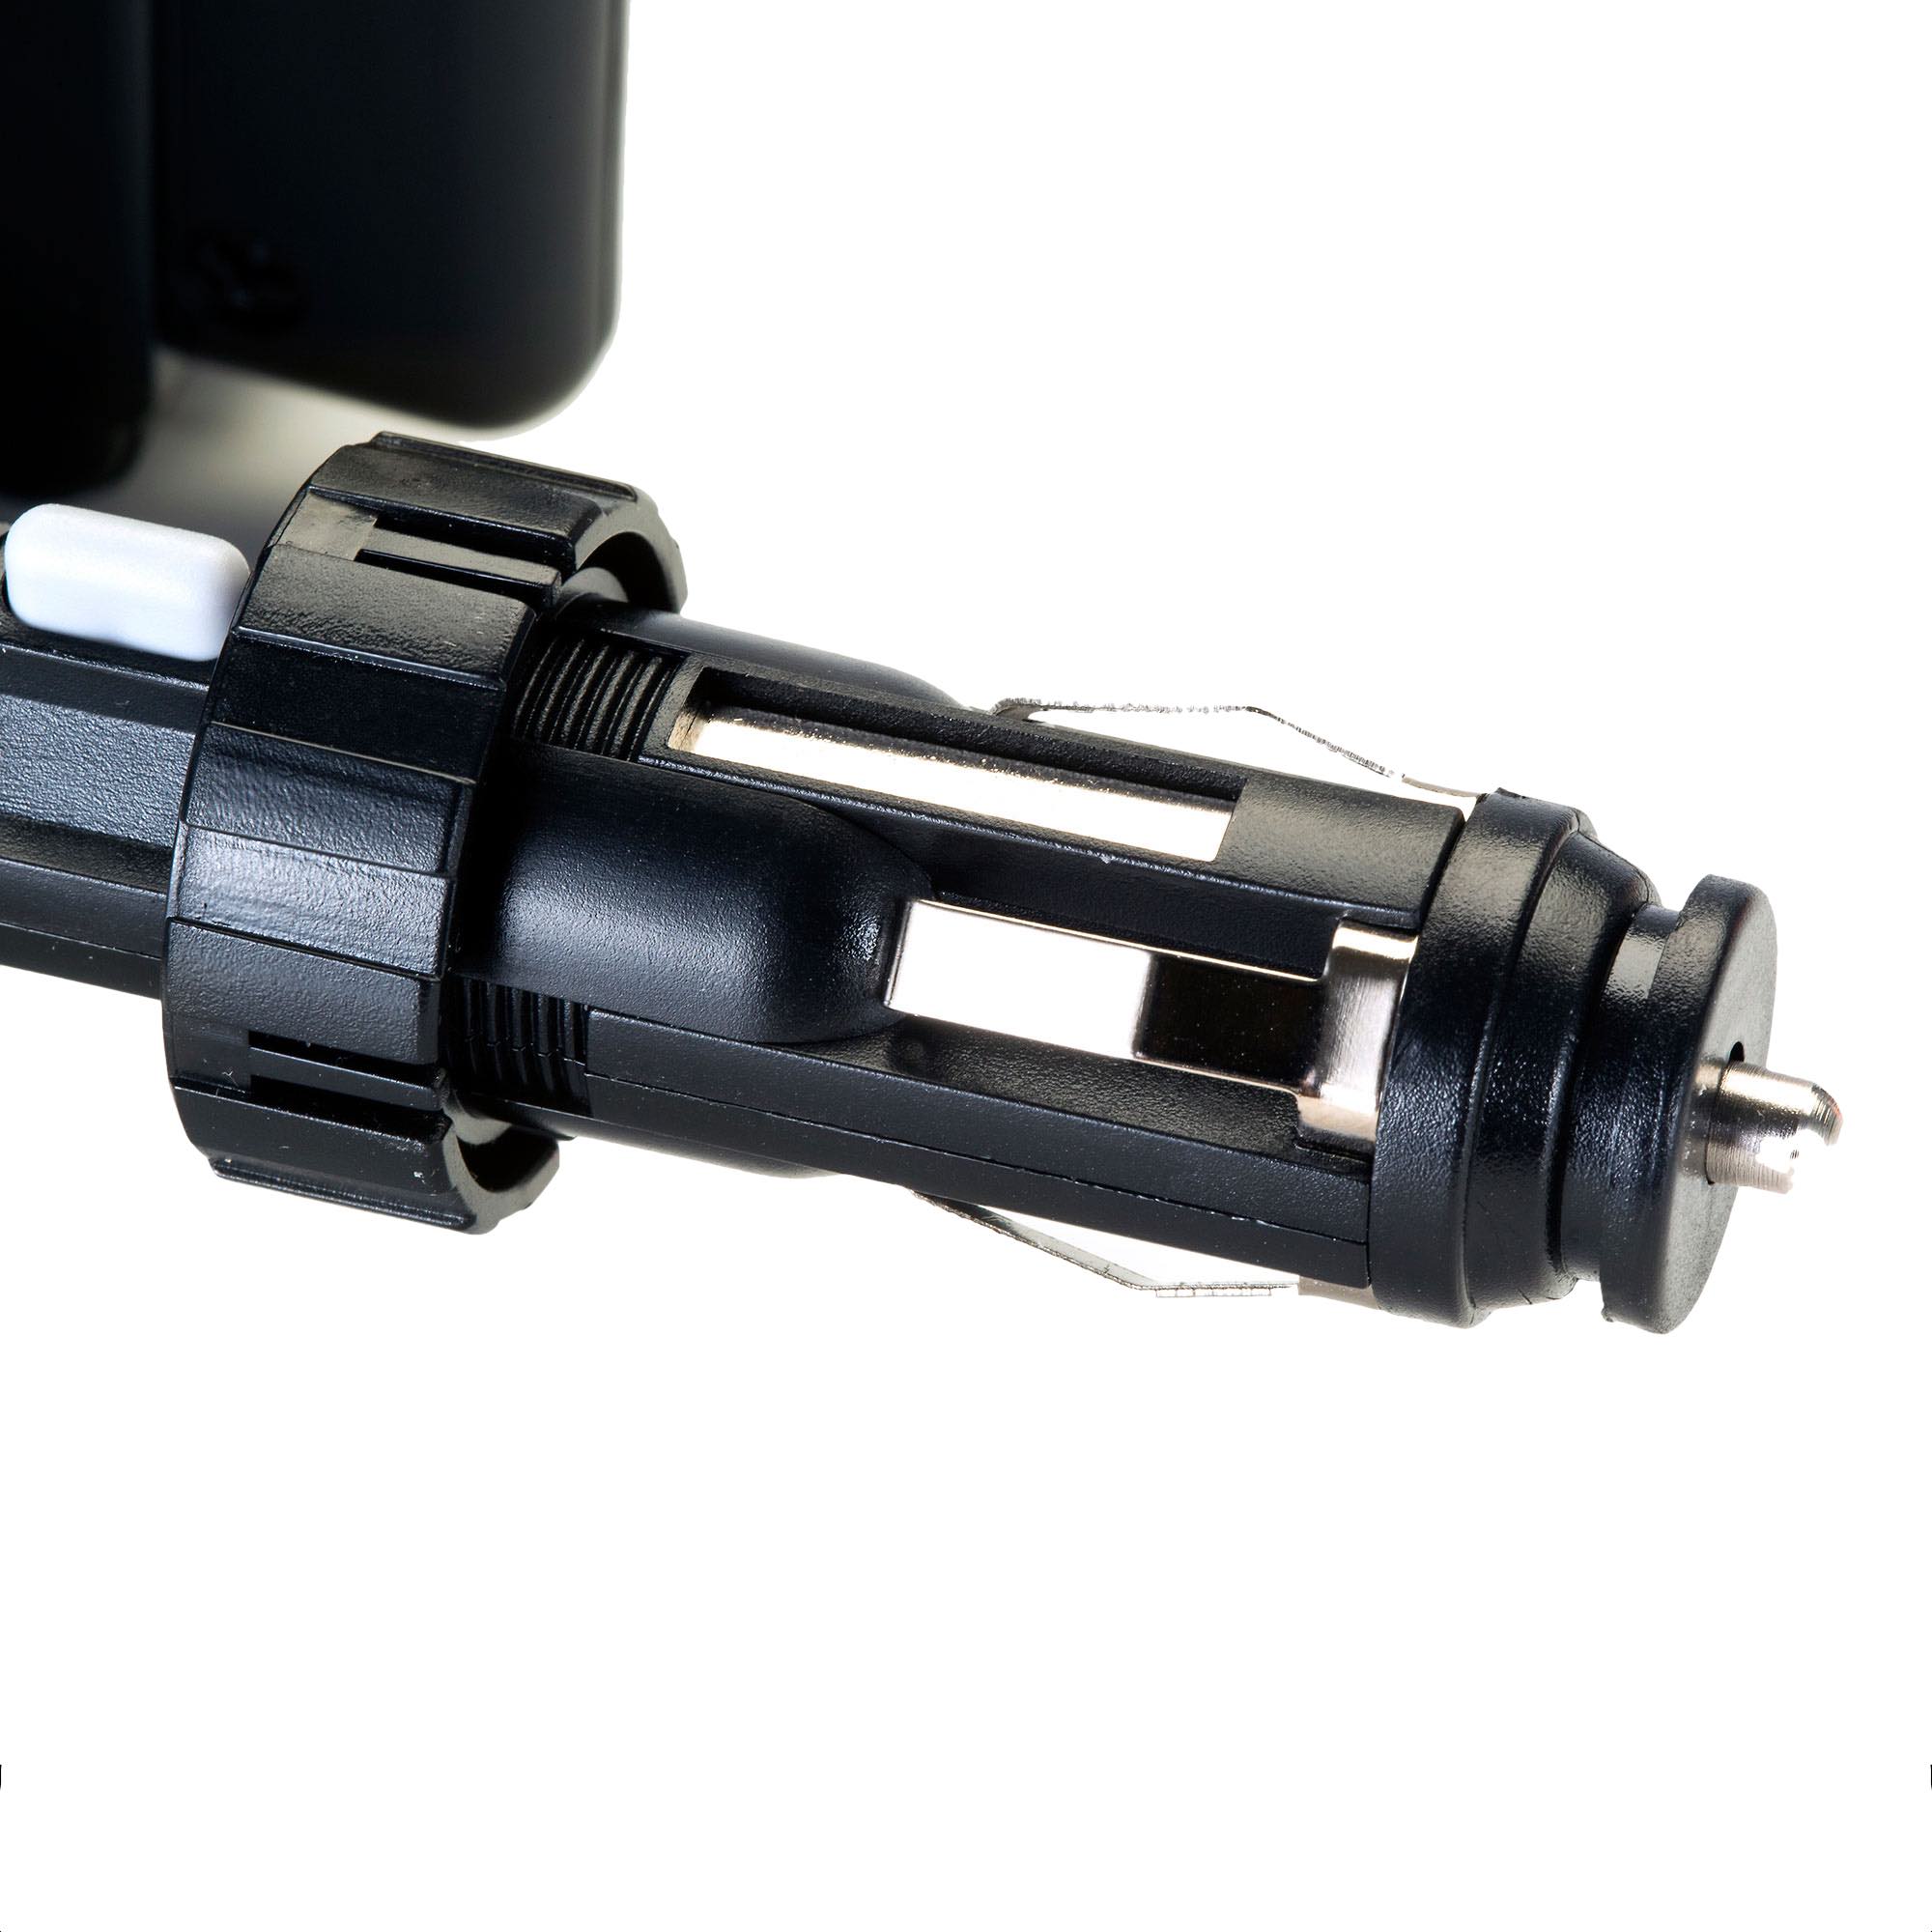 Dual USB / 12V Charger Car Cigarette Lighter Mount and Holder for the Magellan Maestro 4000